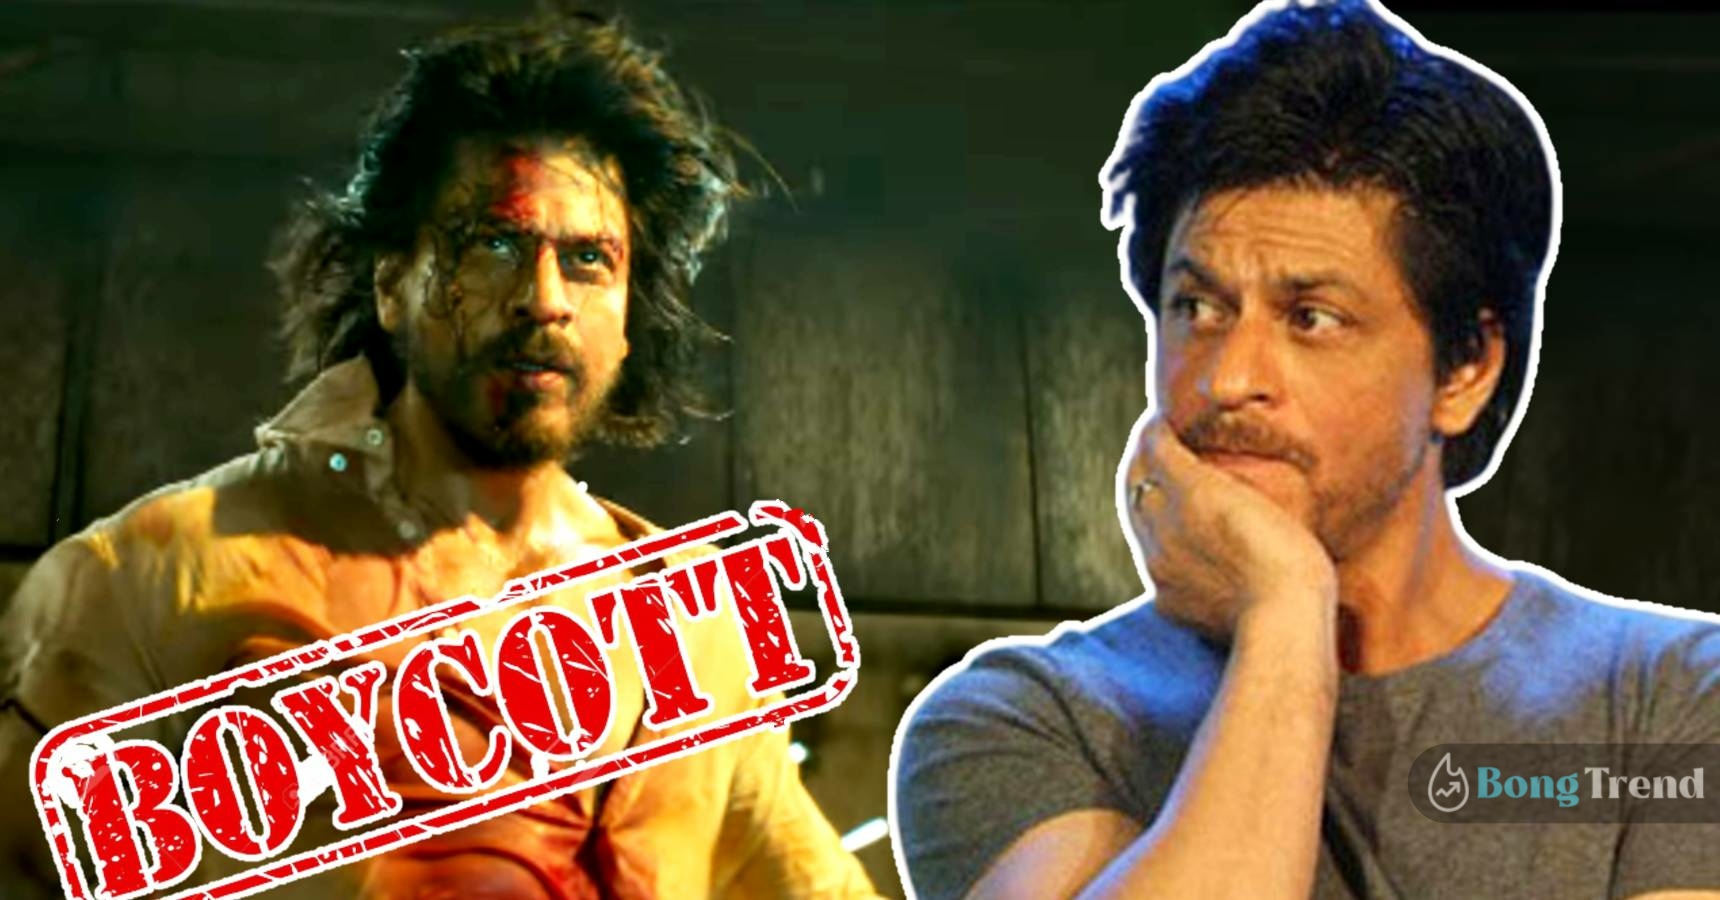 Boycott trend is going on regarding Shah Rukh Khan’s Pathaan teaser